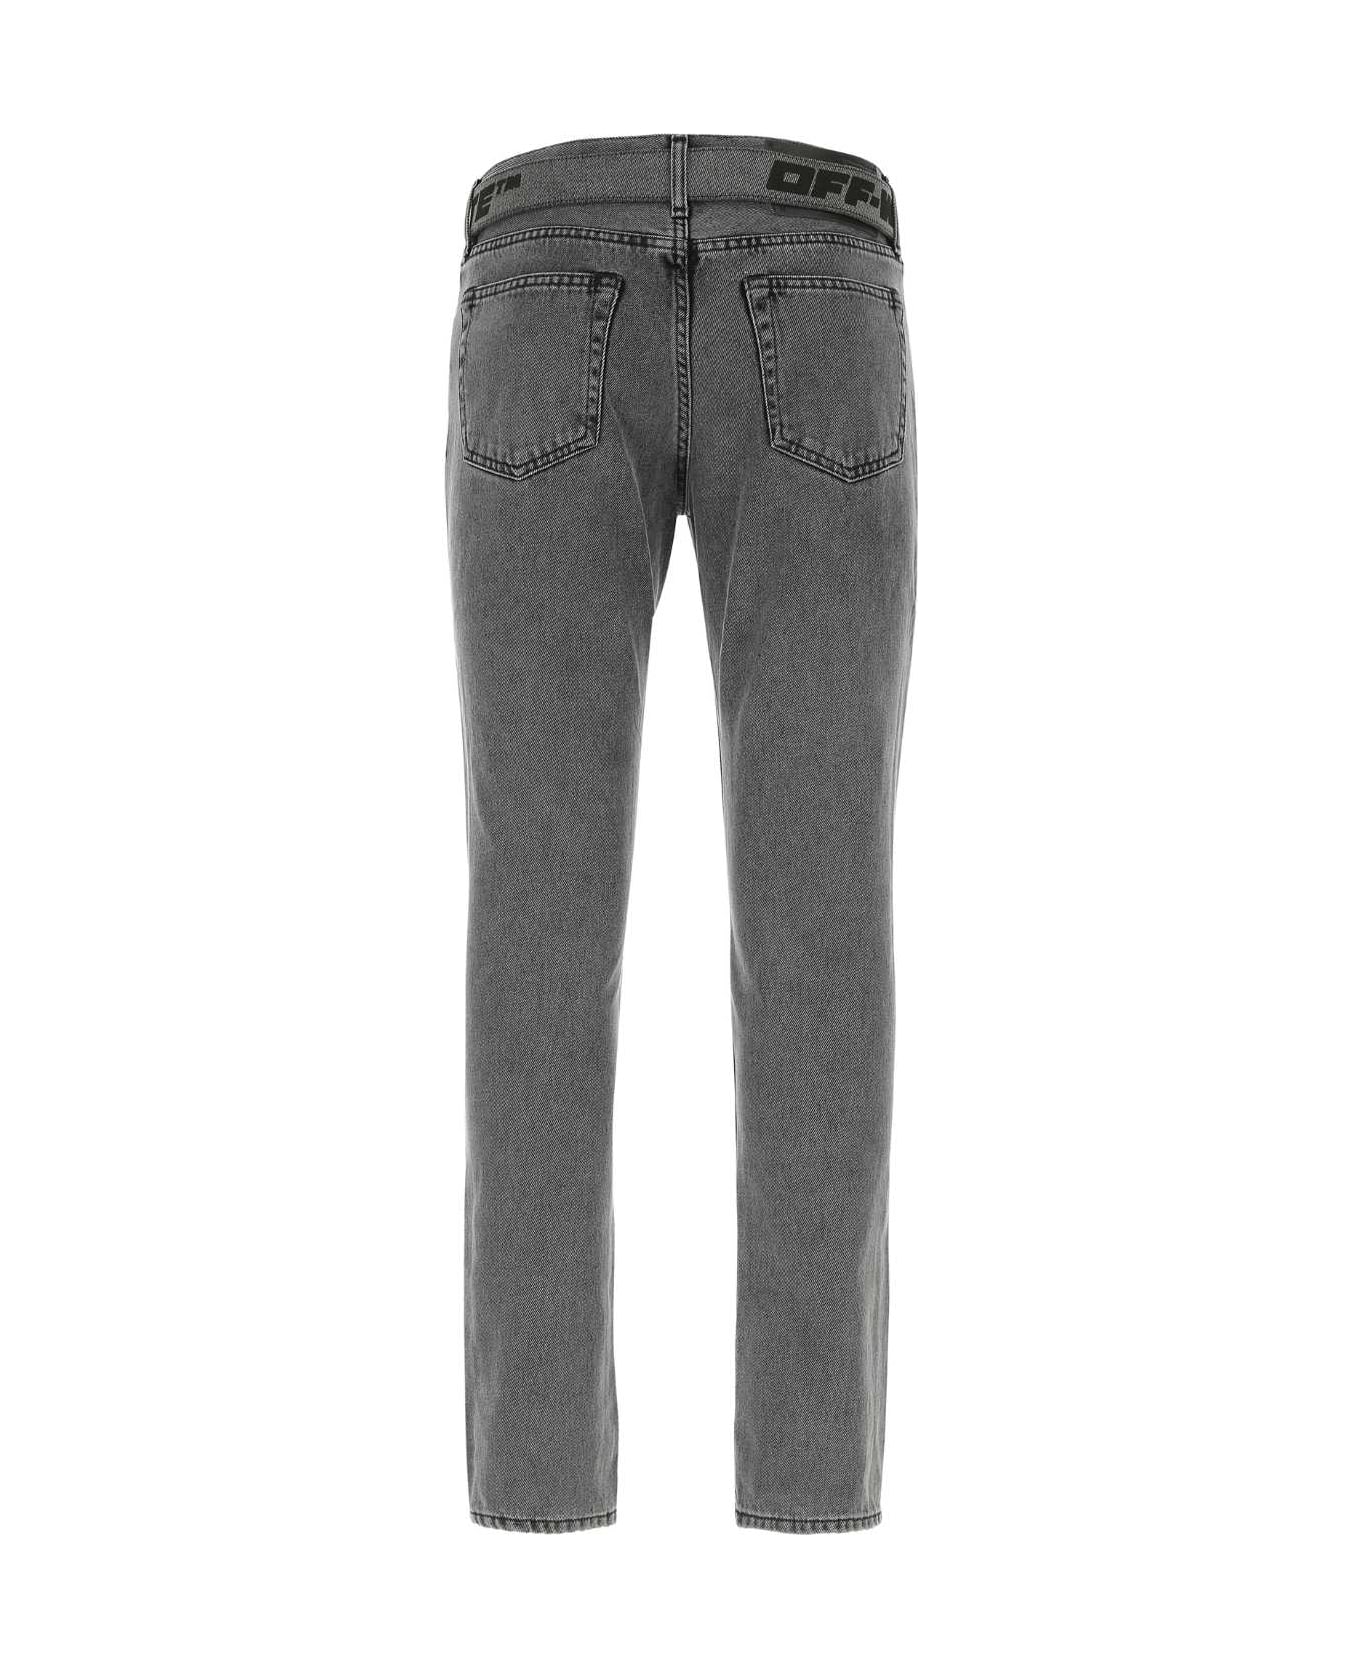 Off-White Black Denim Jeans - 1210